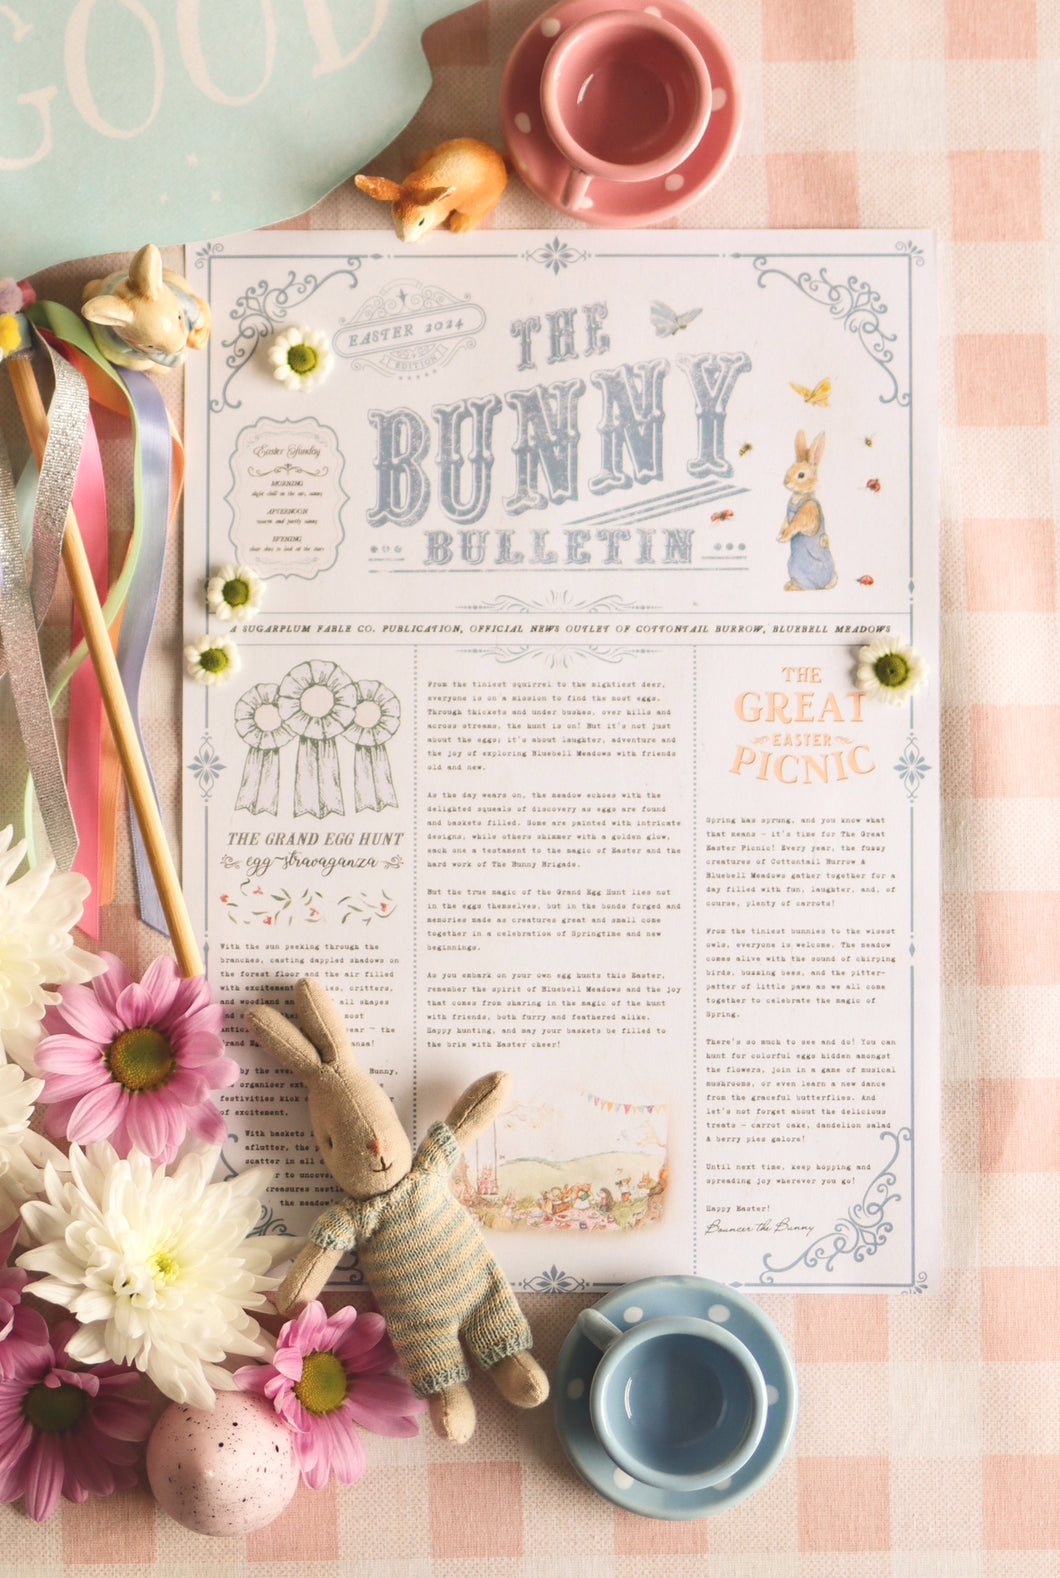 Bunny Bulletin